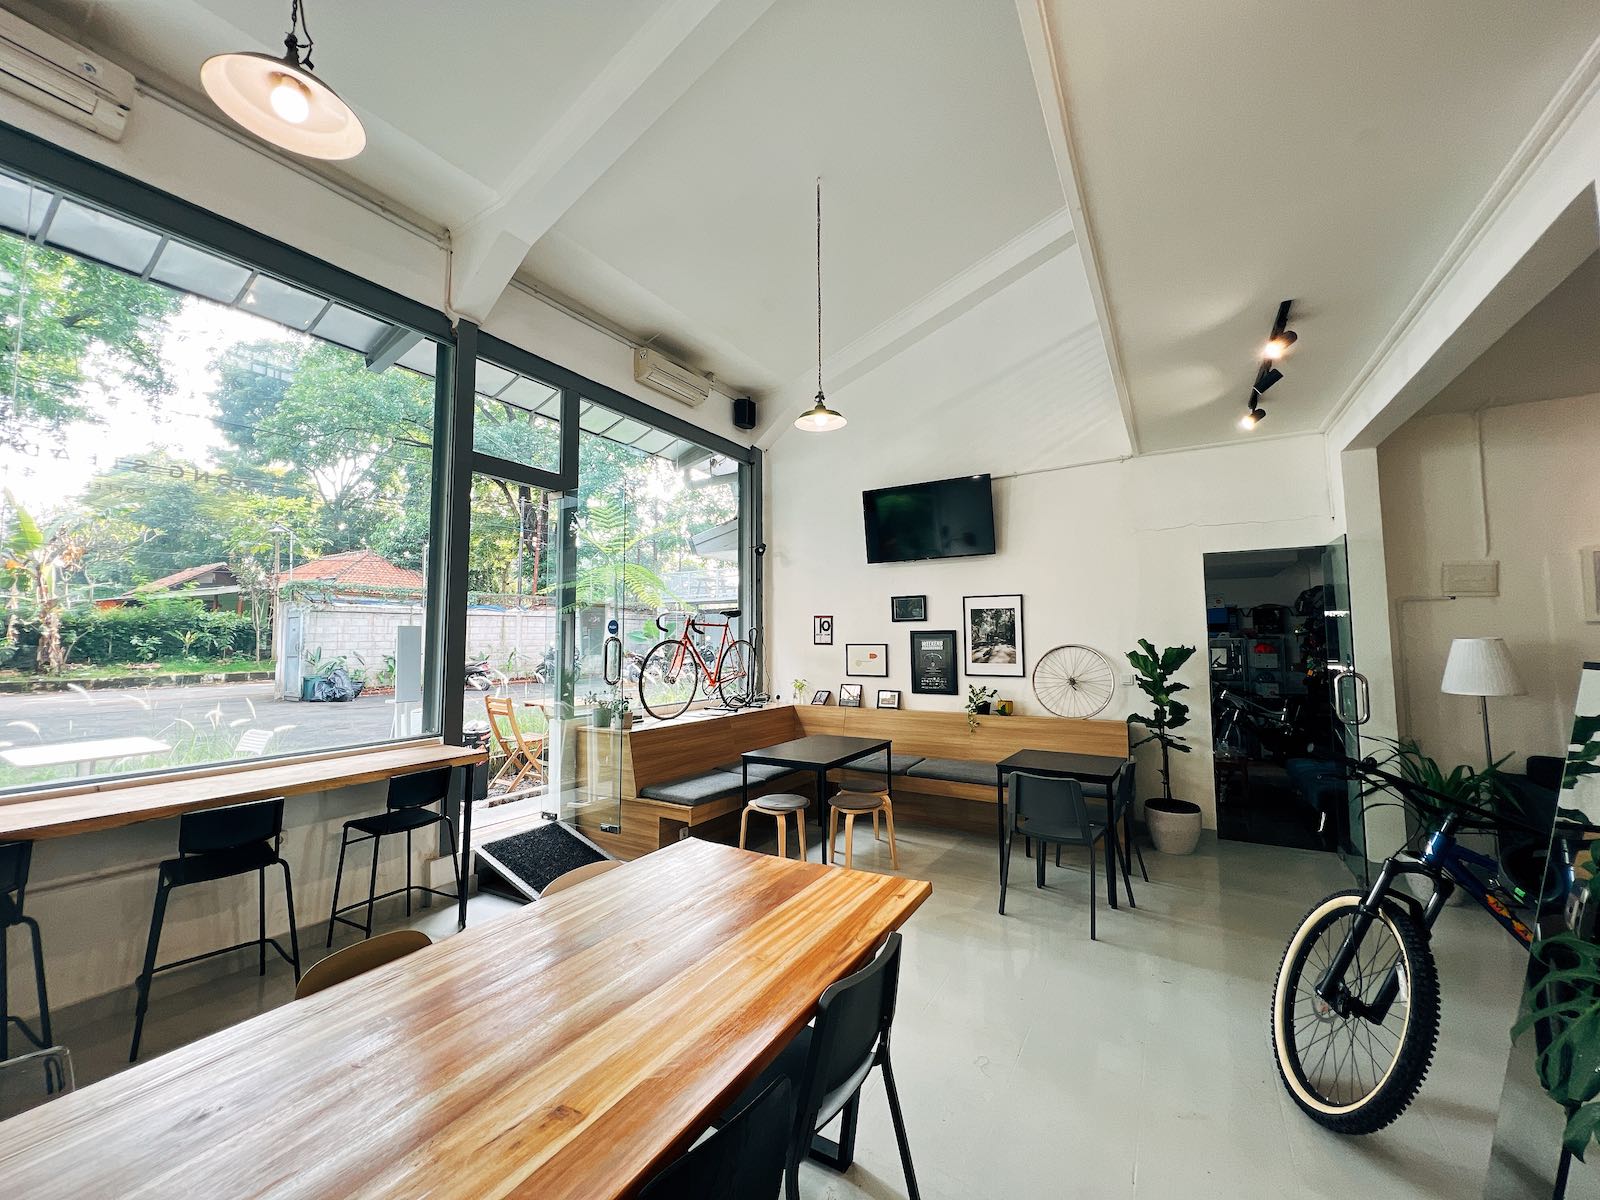 Bandung Cafes Long Steady Distance Inside